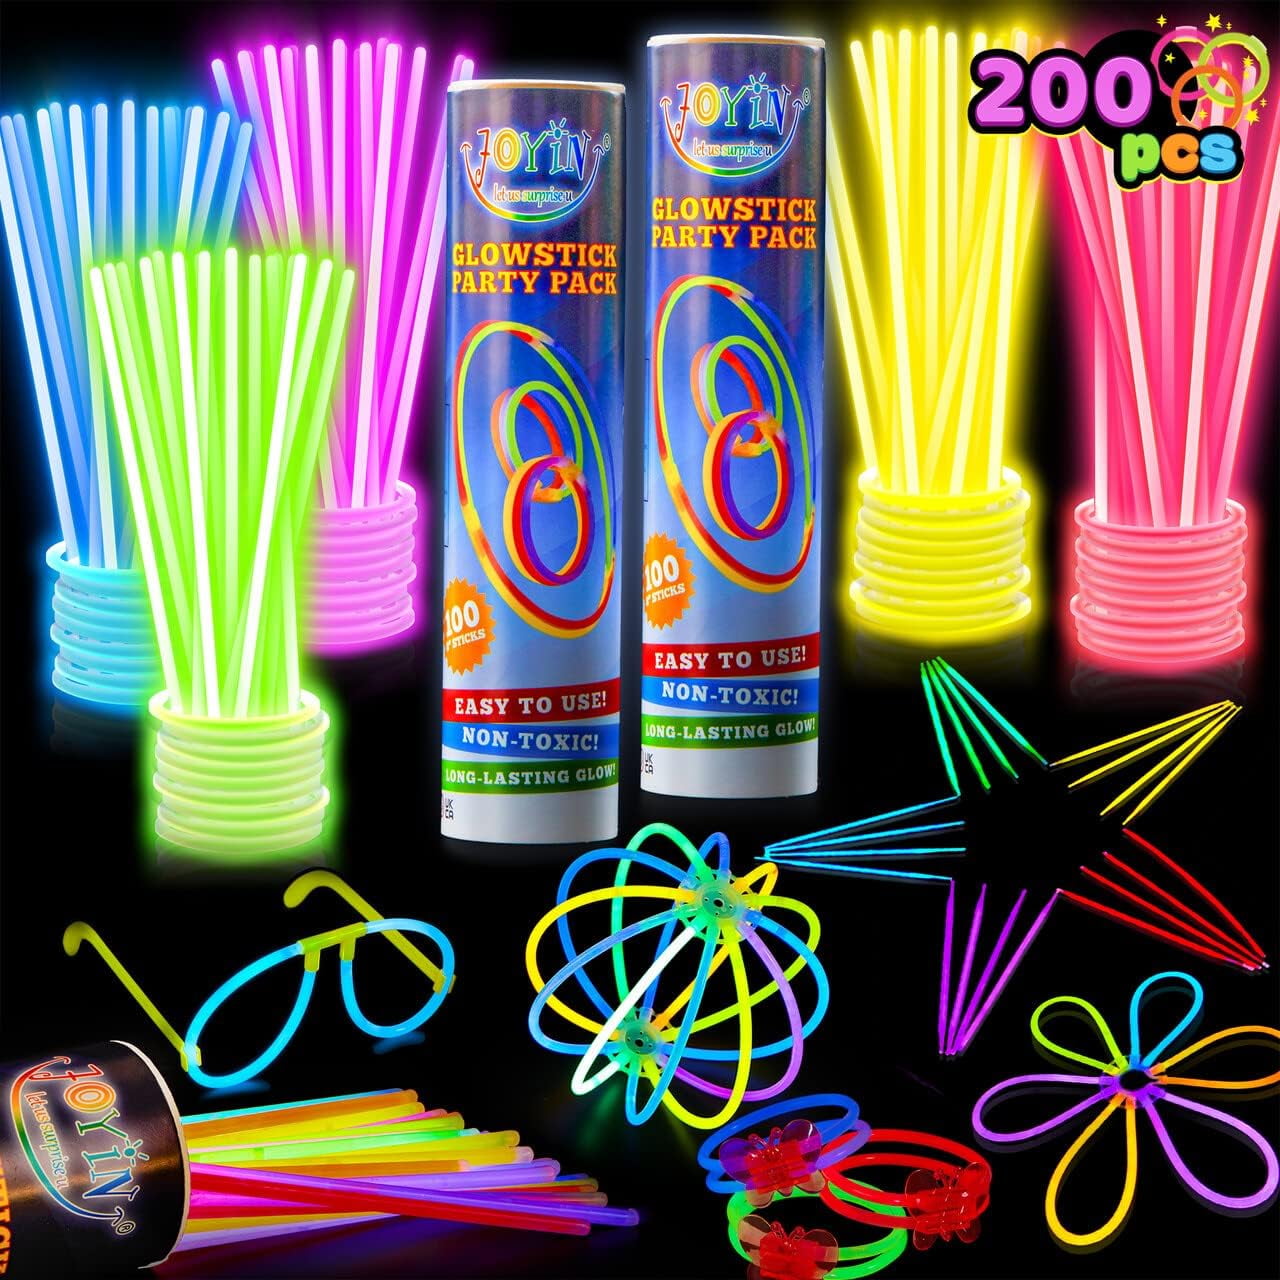 JOYIN 200 Pcs Glow Sticks 8 Glow in the Dark Sticks Glow with Necklaces and Bracelets Connectors Light up Glowsticks Party Favors d07f90d8 d89e 4010 a20f 0ac07da8e2f6.7b9f089a783433010f4bf35ff04a9762